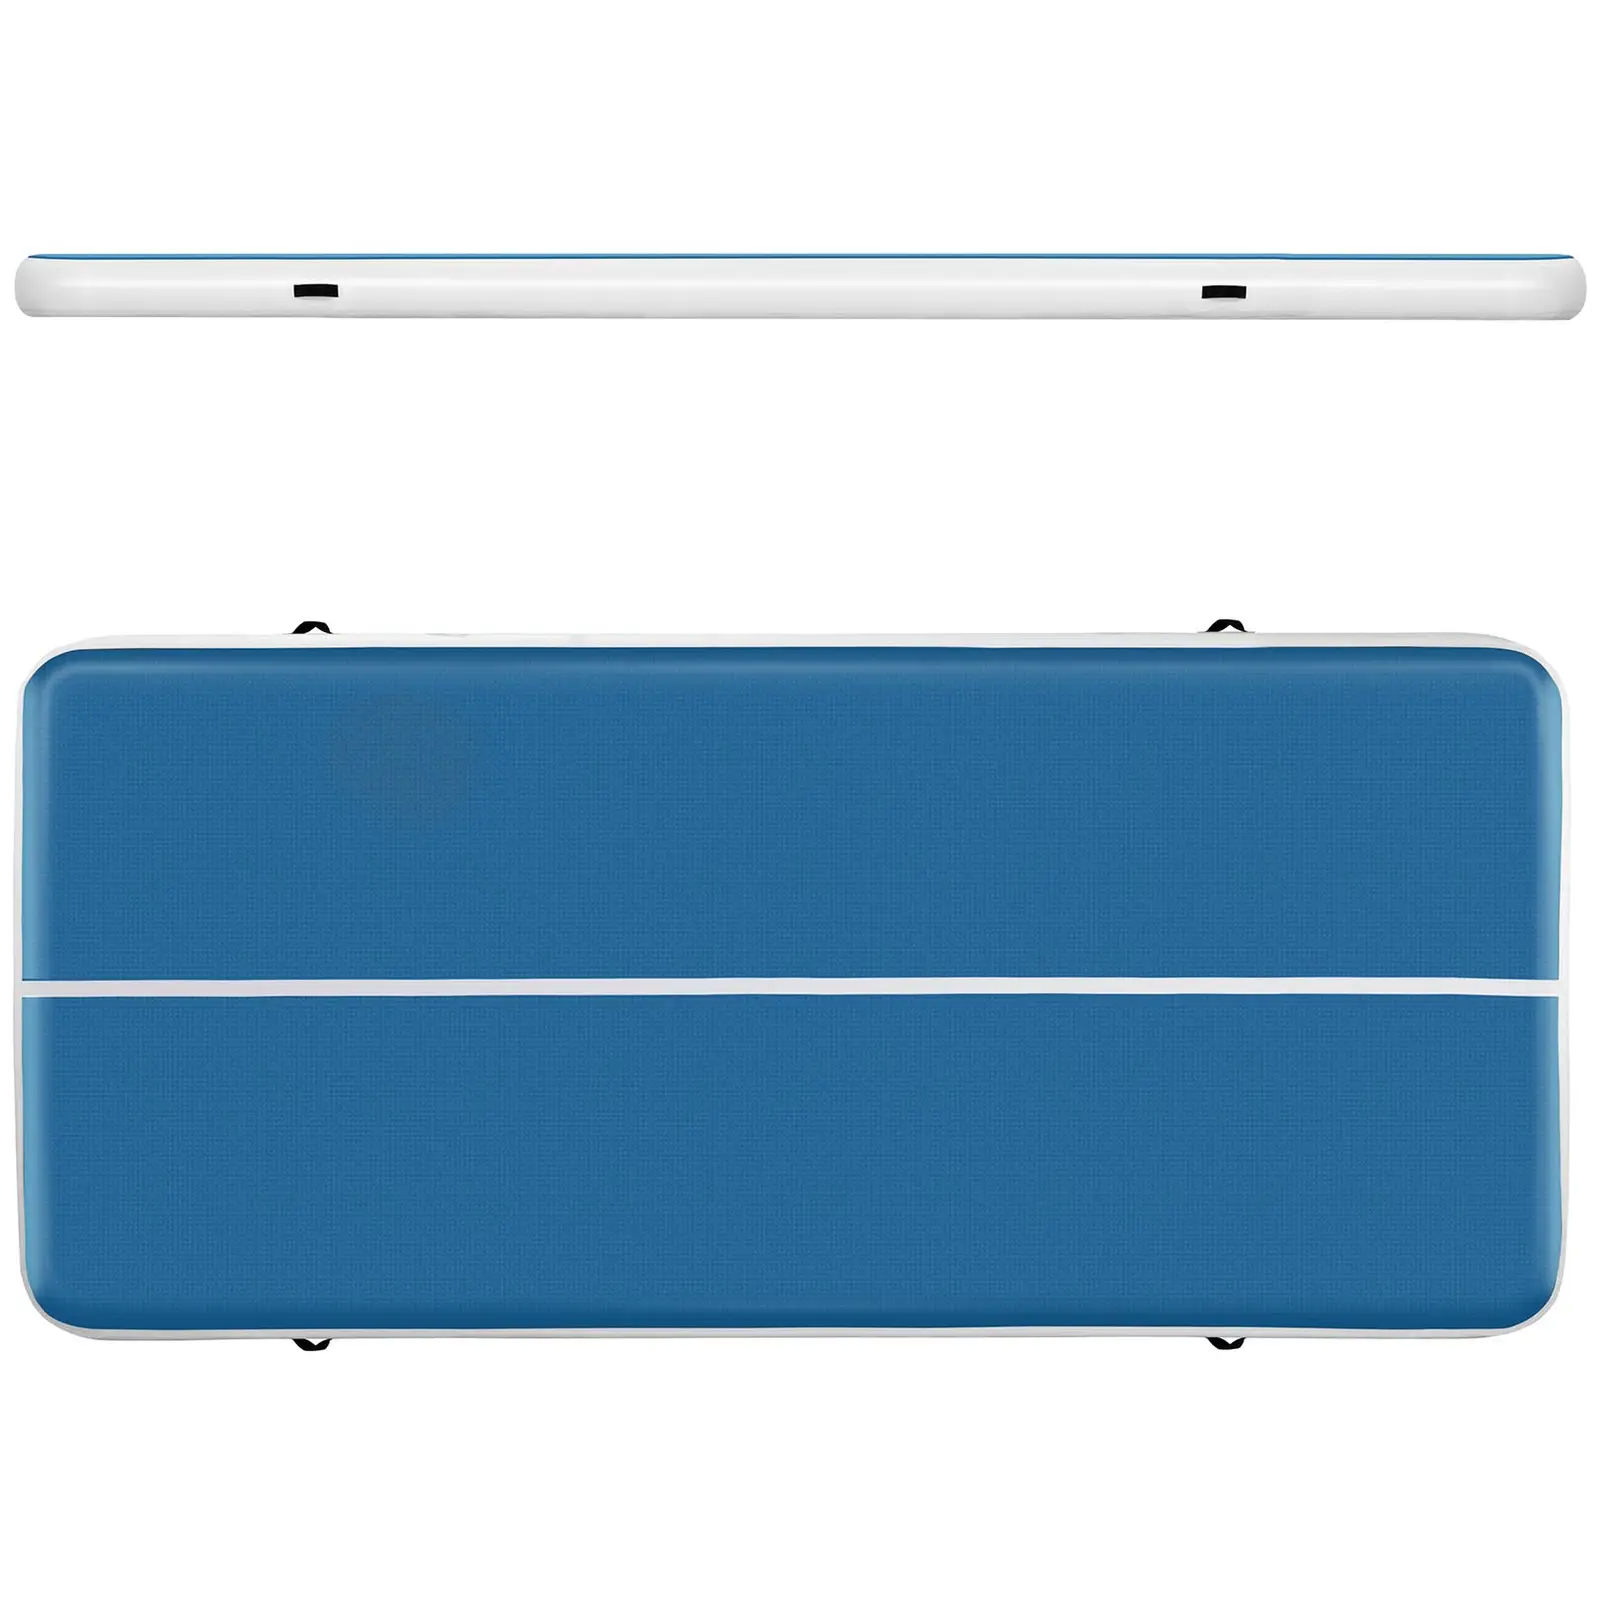 Set Aufblasbare Turnmatte inklusive Luftpumpe - 300 x 200 x 20 cm - 300 kg - blau/weiß